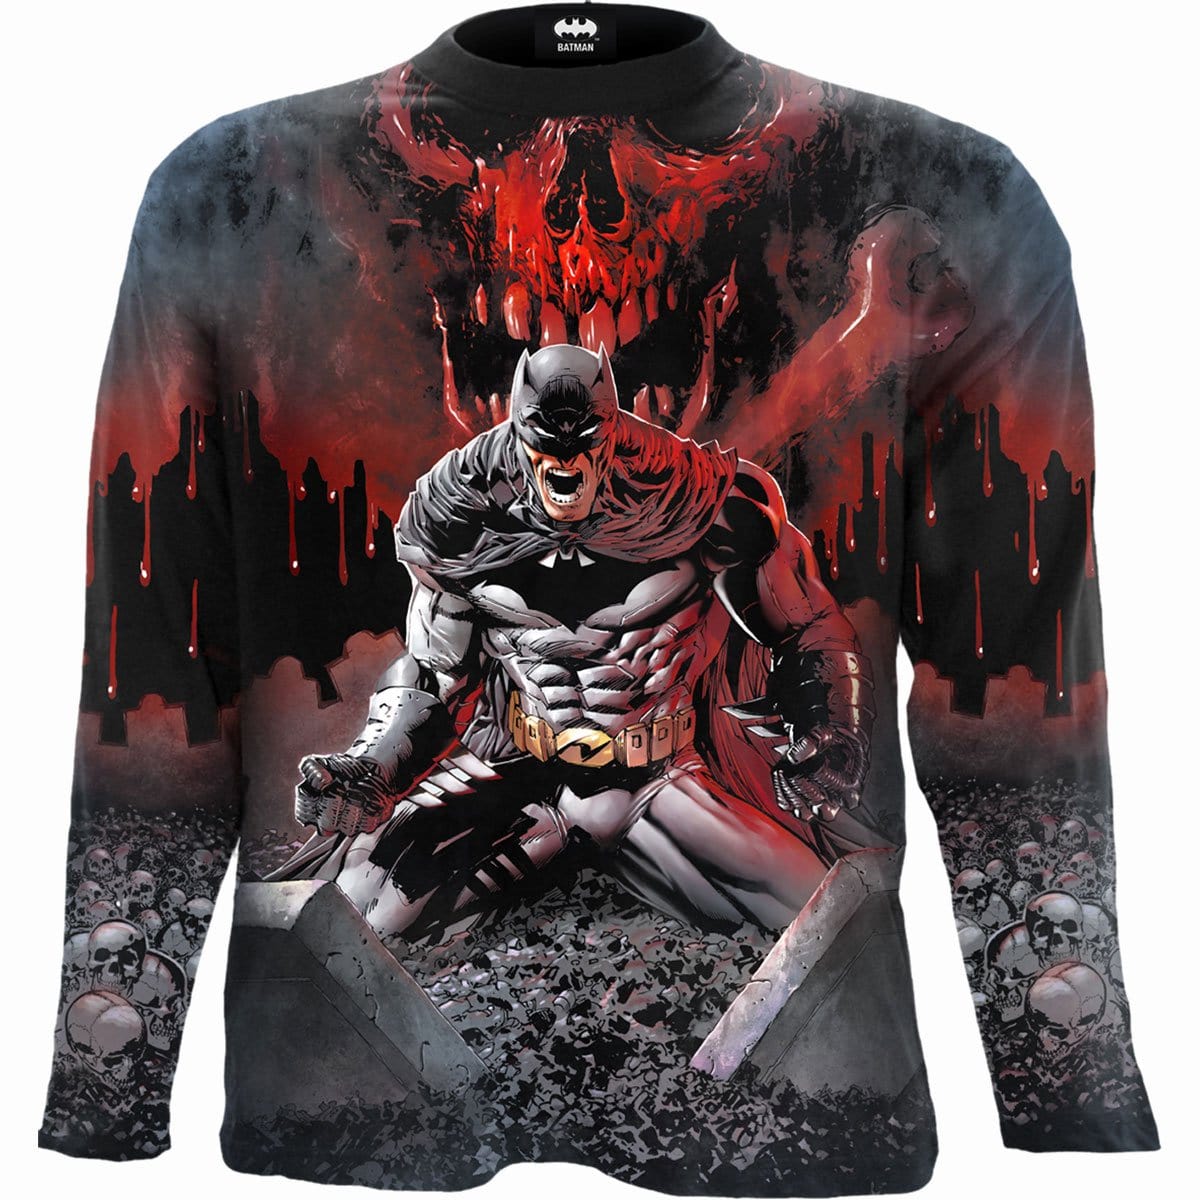 BATMAN ASYLUM WRAP - Longsleeve T-Shirt Black